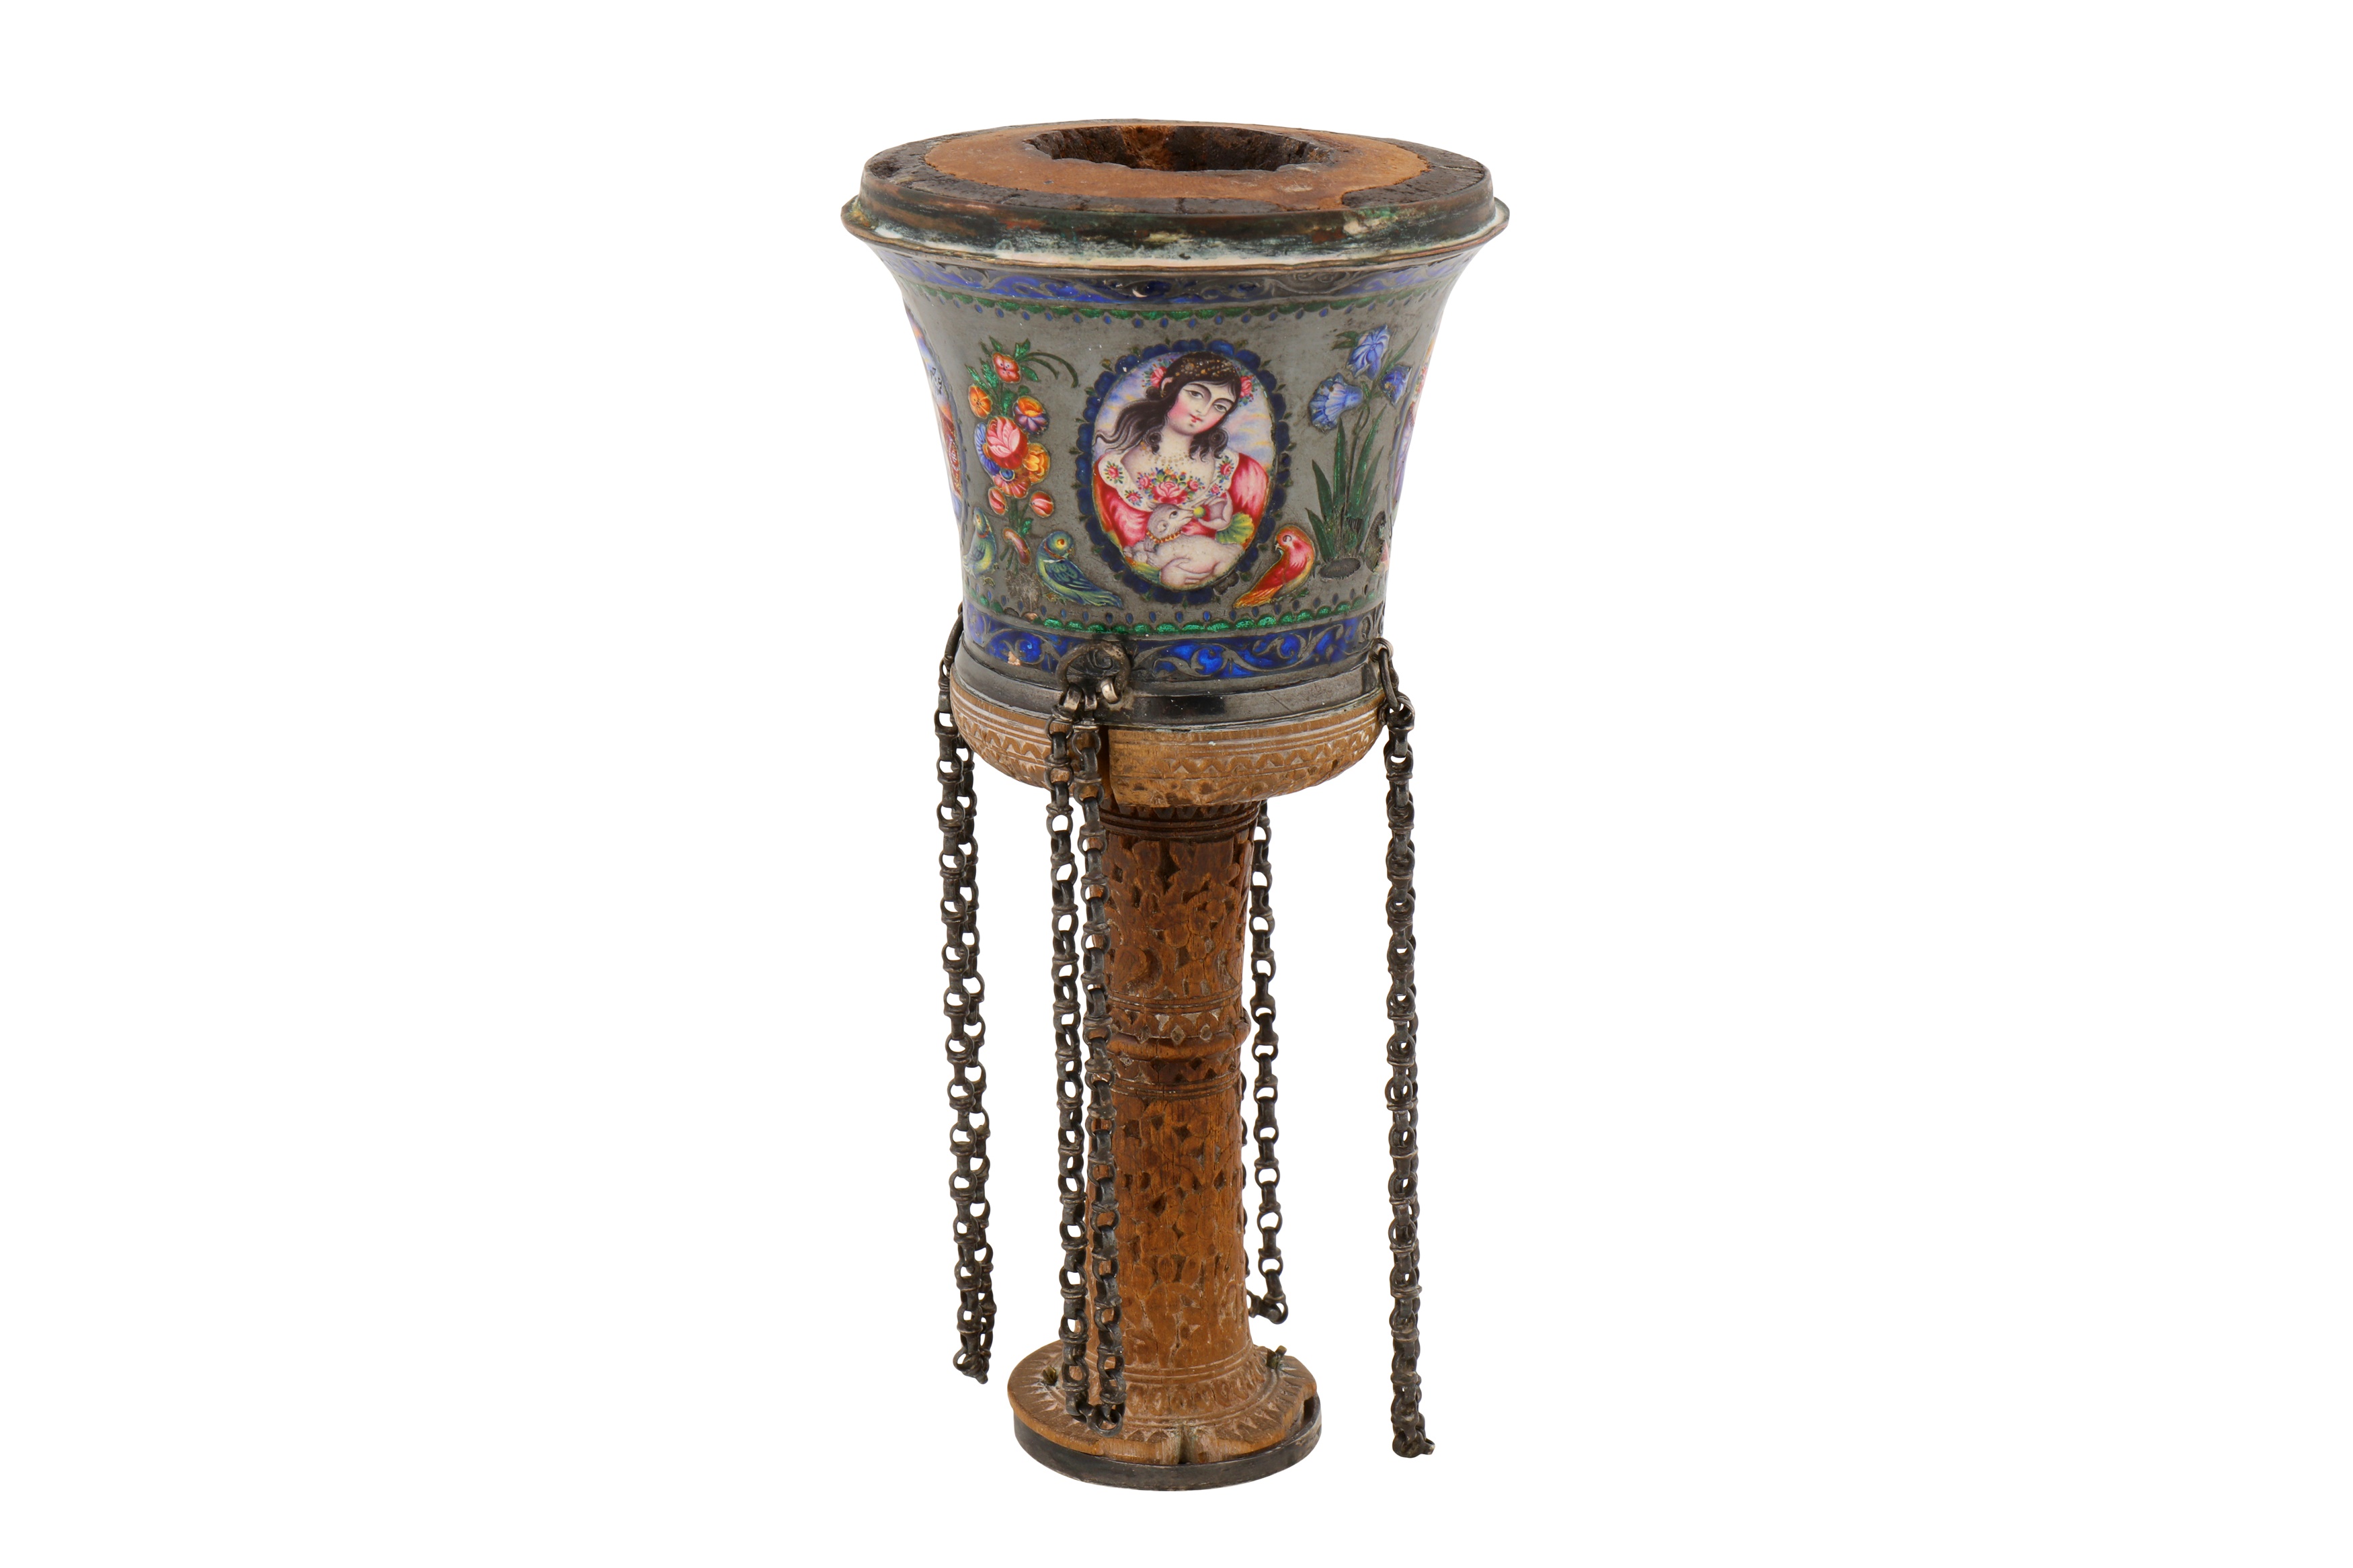 A 19TH CENTURY PERSIAN QAJAR ENAMELLED GILT-COPPER GHALIAN CUP SIGNED 'ABD AL-RAHIM' - Image 3 of 6